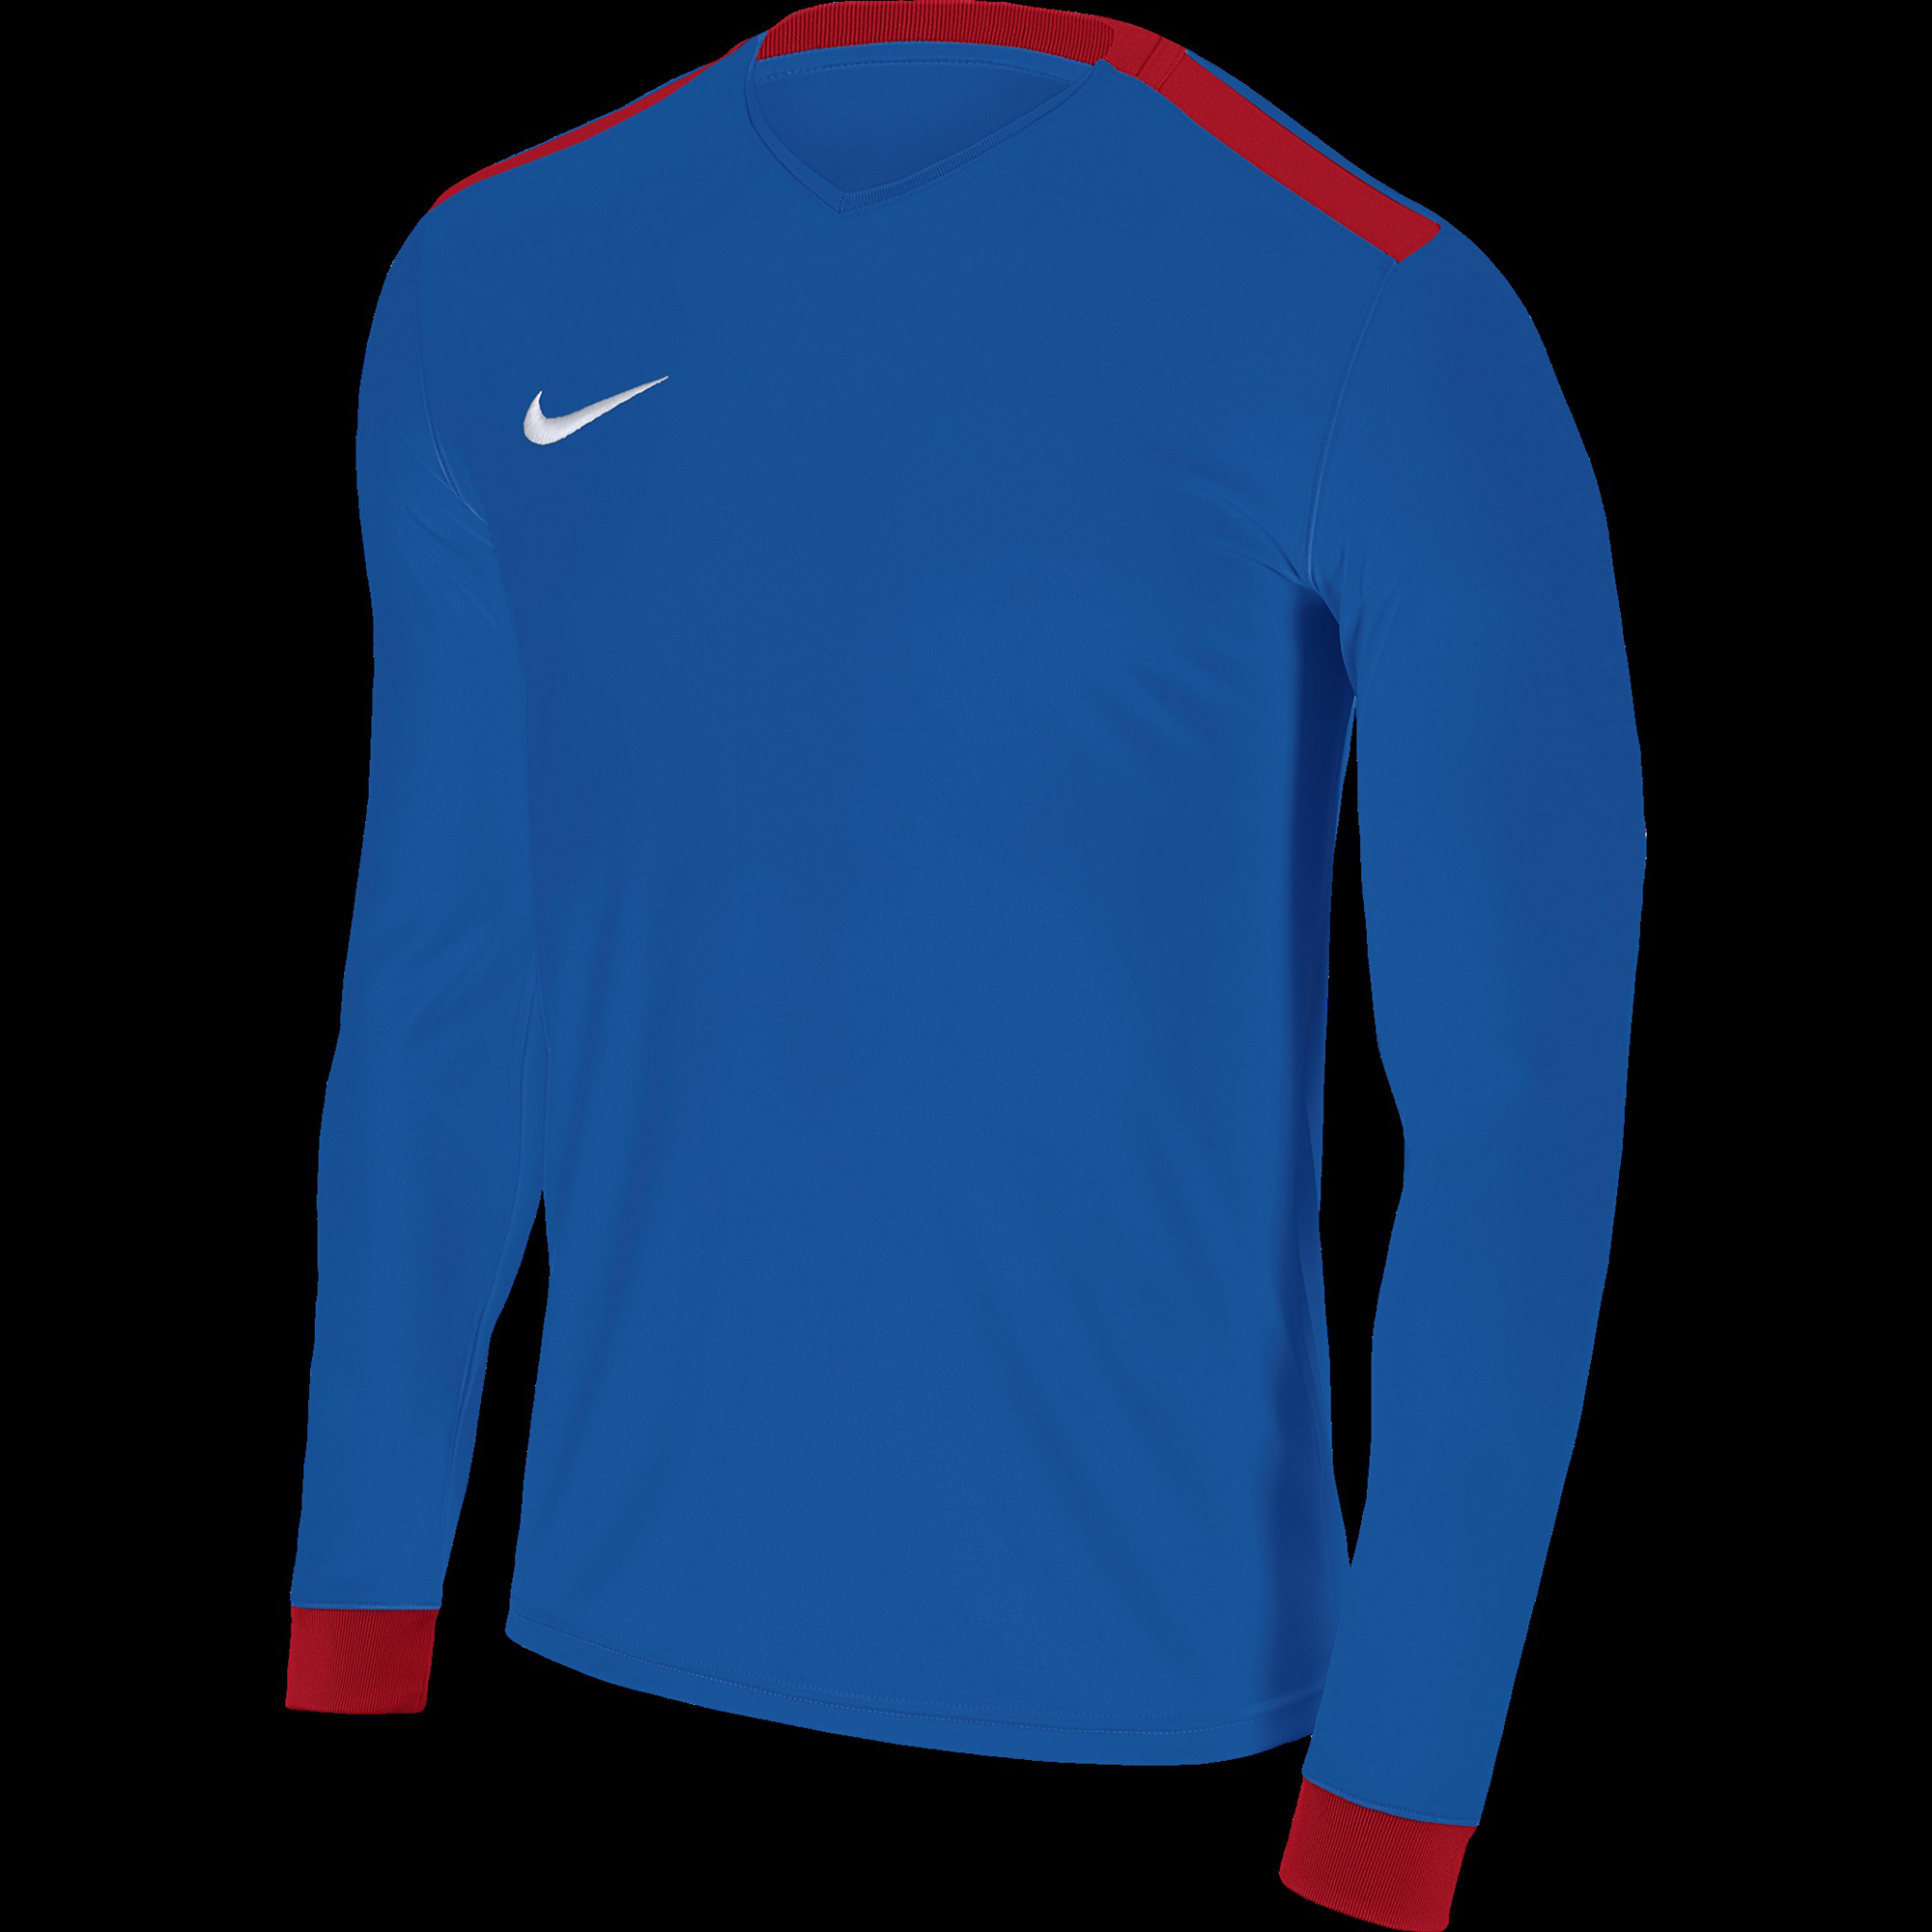 royal blue jersey design